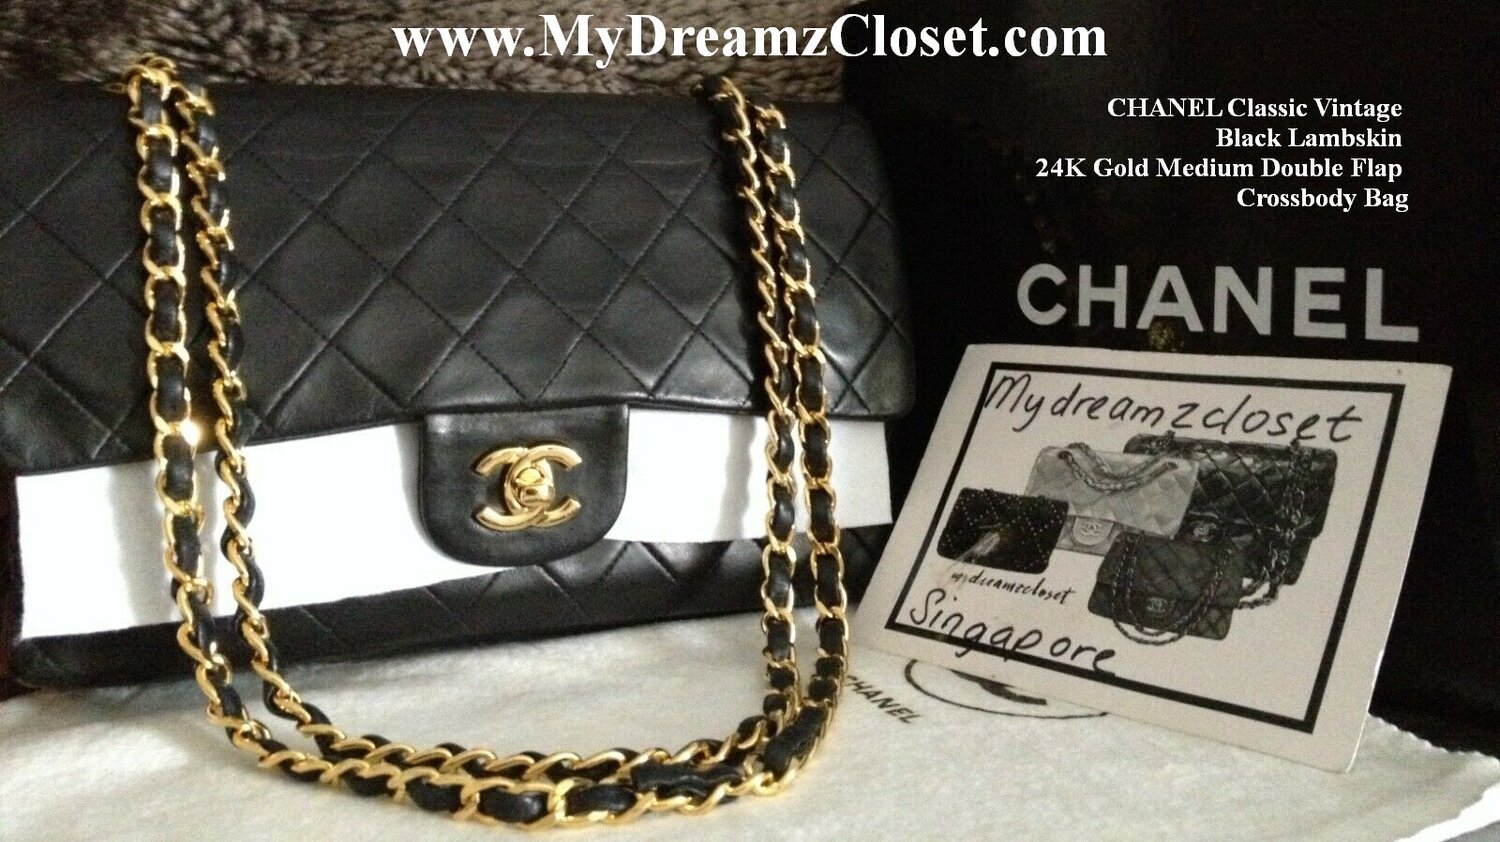 CHANEL Classic Vintage Black Lambskin 24K Gold Reissue Chain Double Flap  Med Bag - My Dreamz Closet